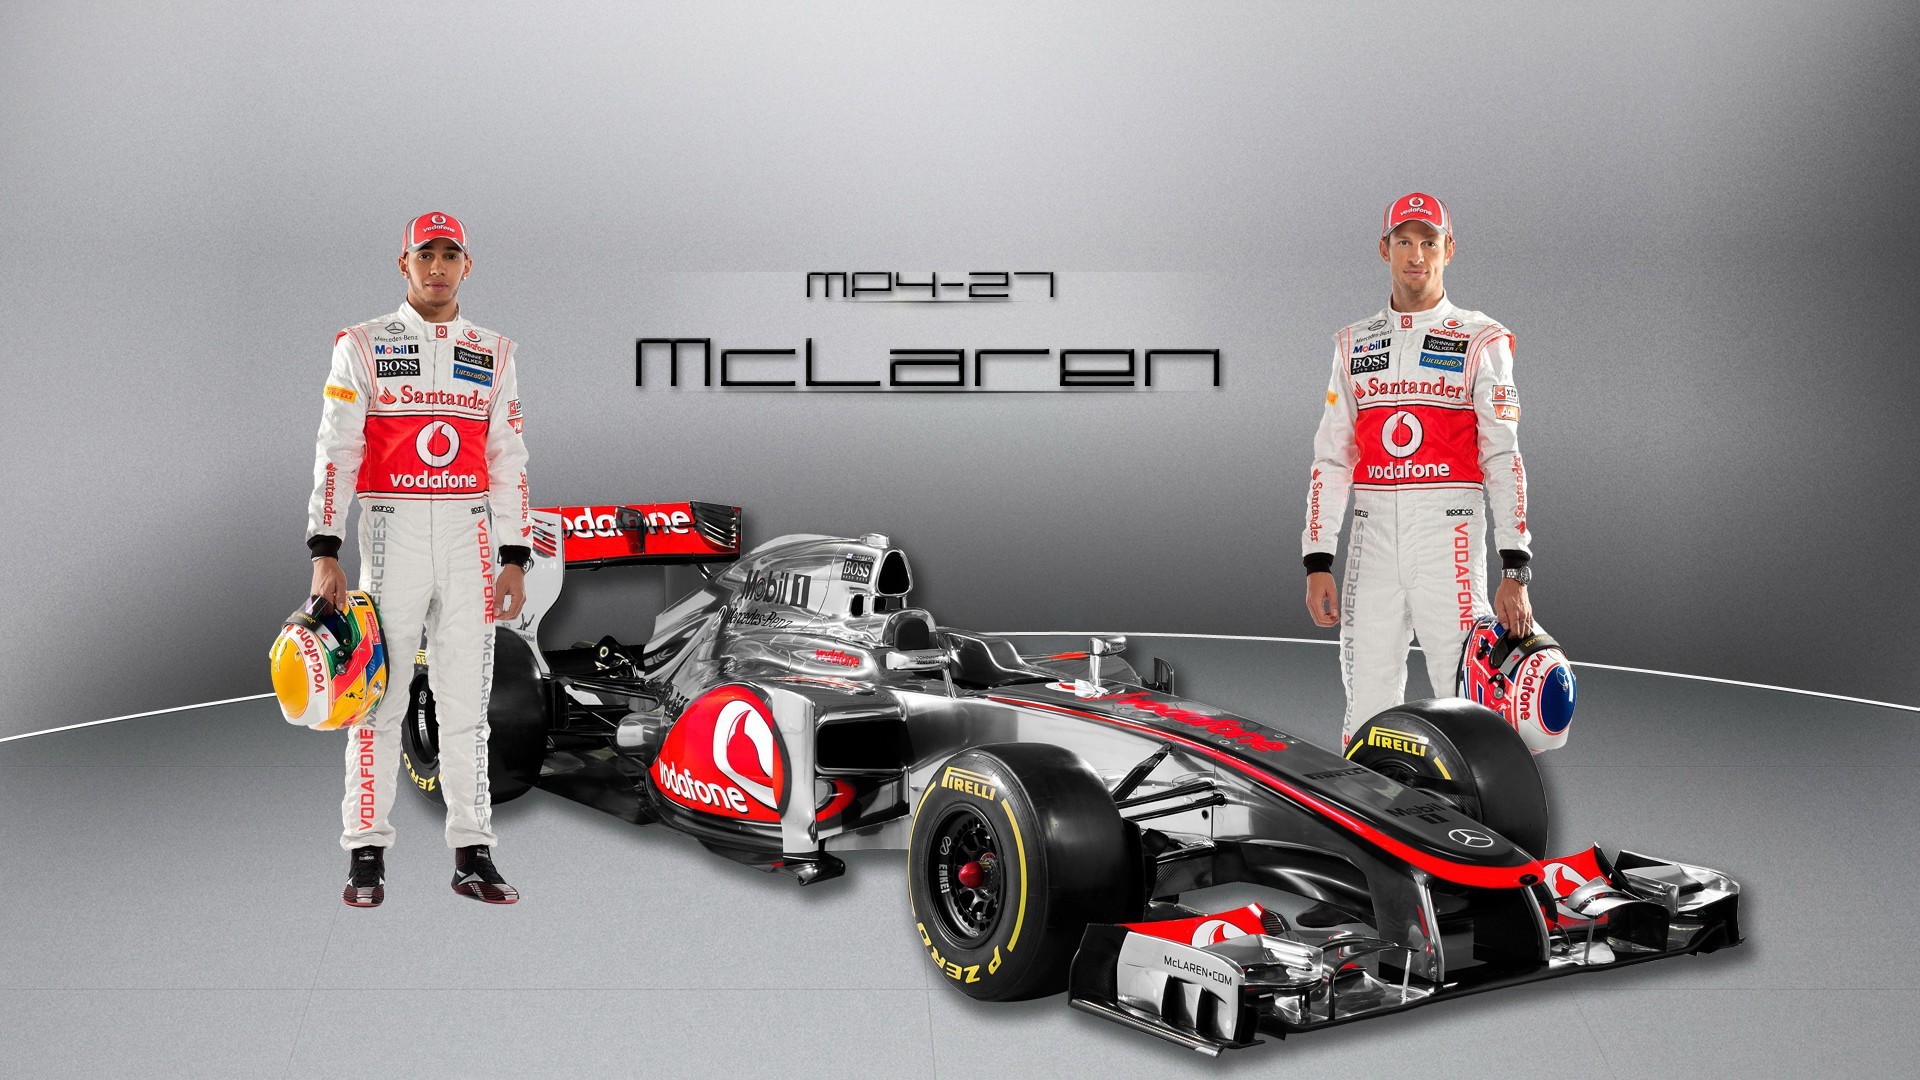 Formula 1, McLaren Formula 1, Lewis Hamilton, Jenson Button Wallpaper